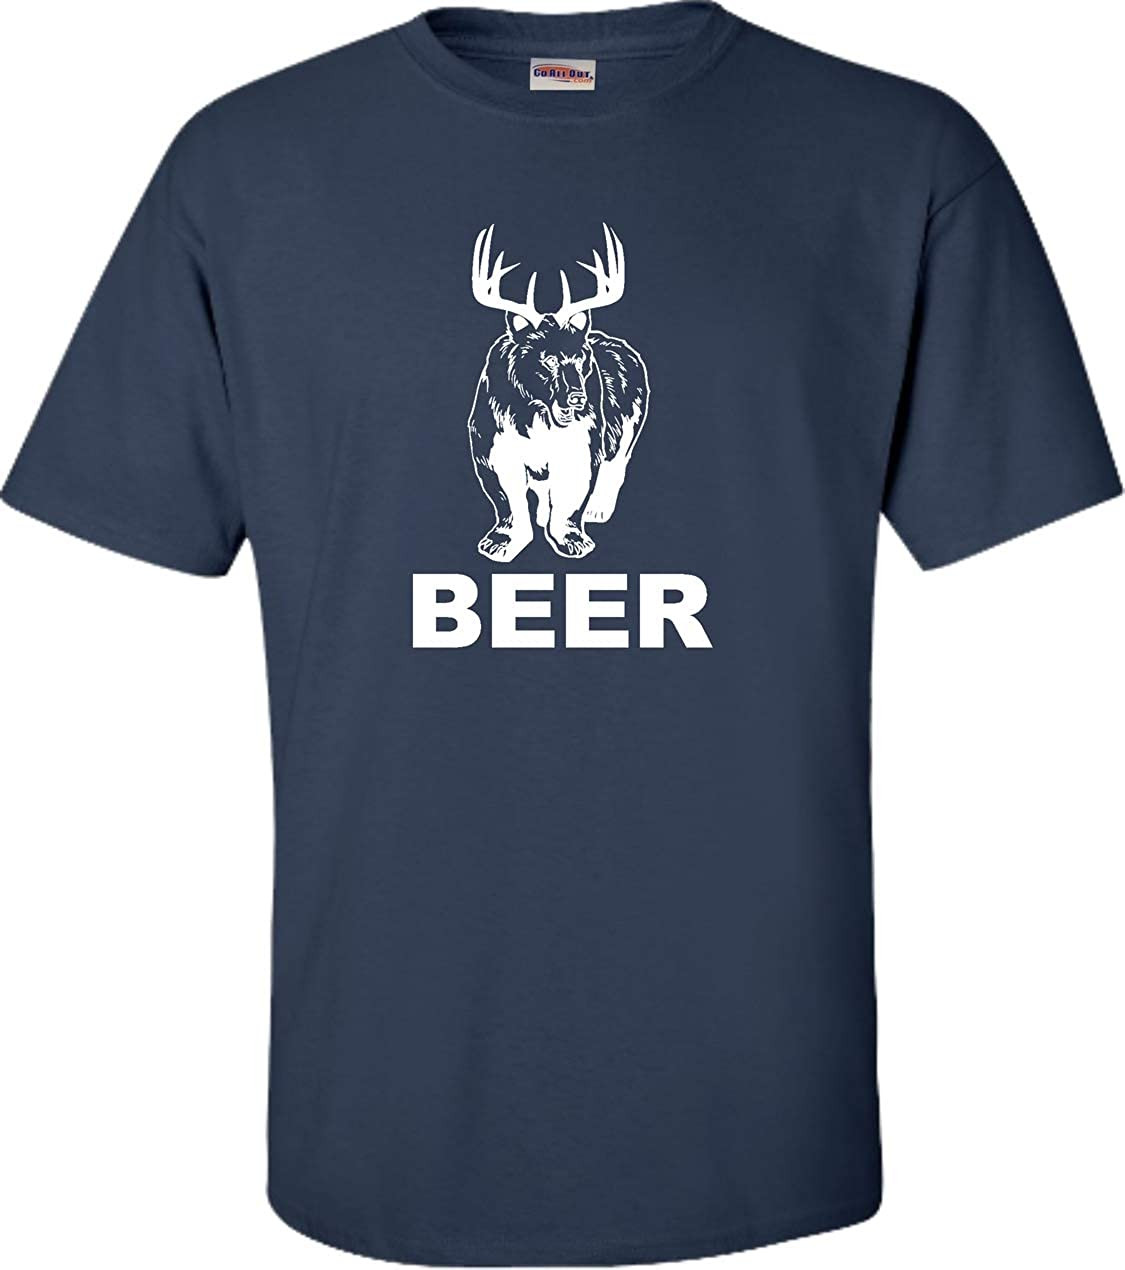 Bear + Deer = Beer T-Shirt